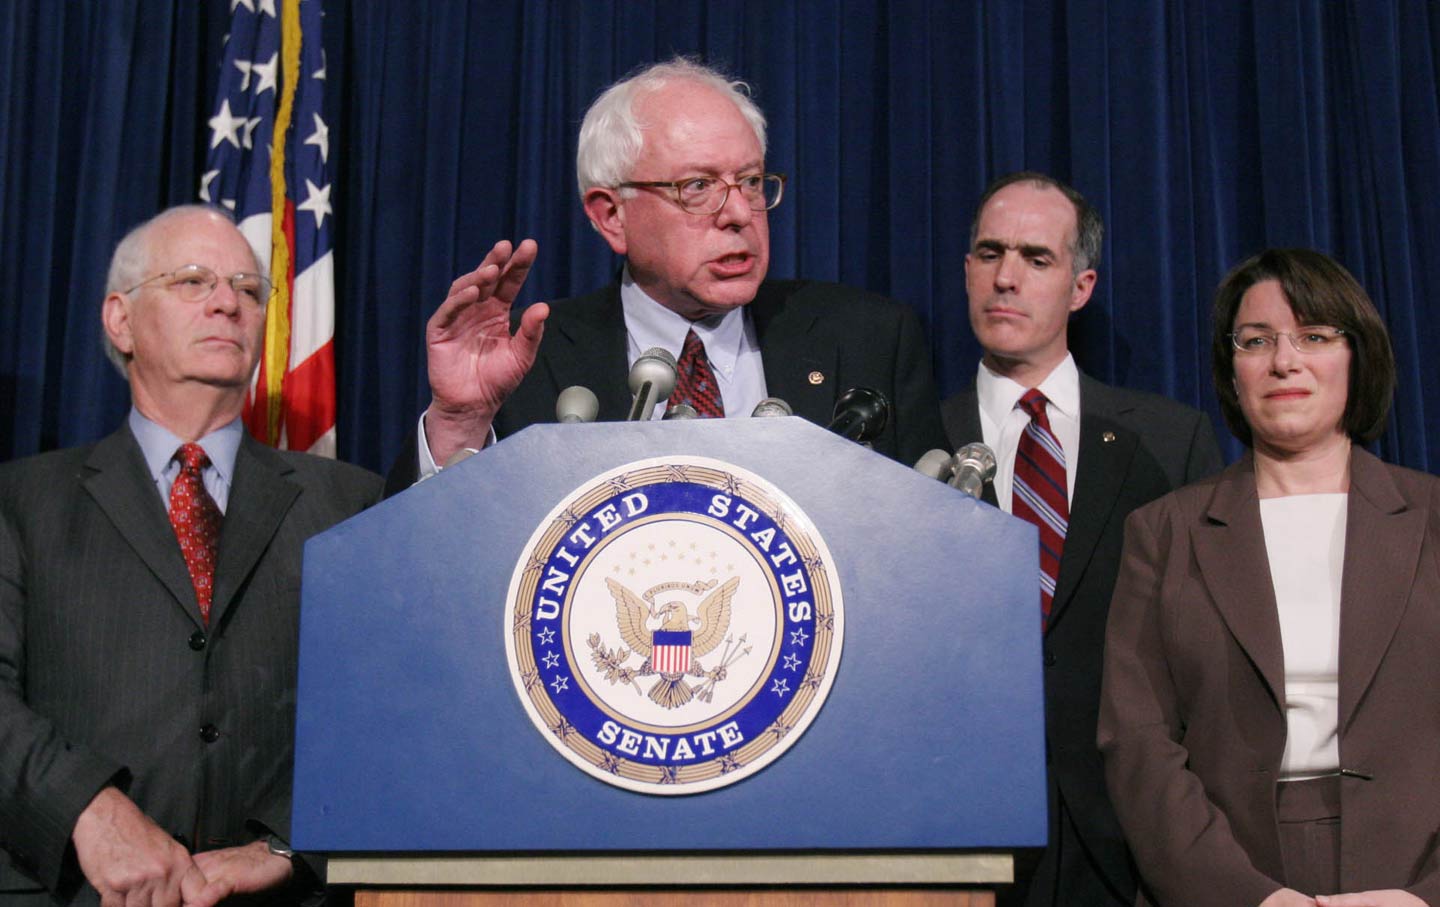 Bernie Sanders speaks out against Iraq.